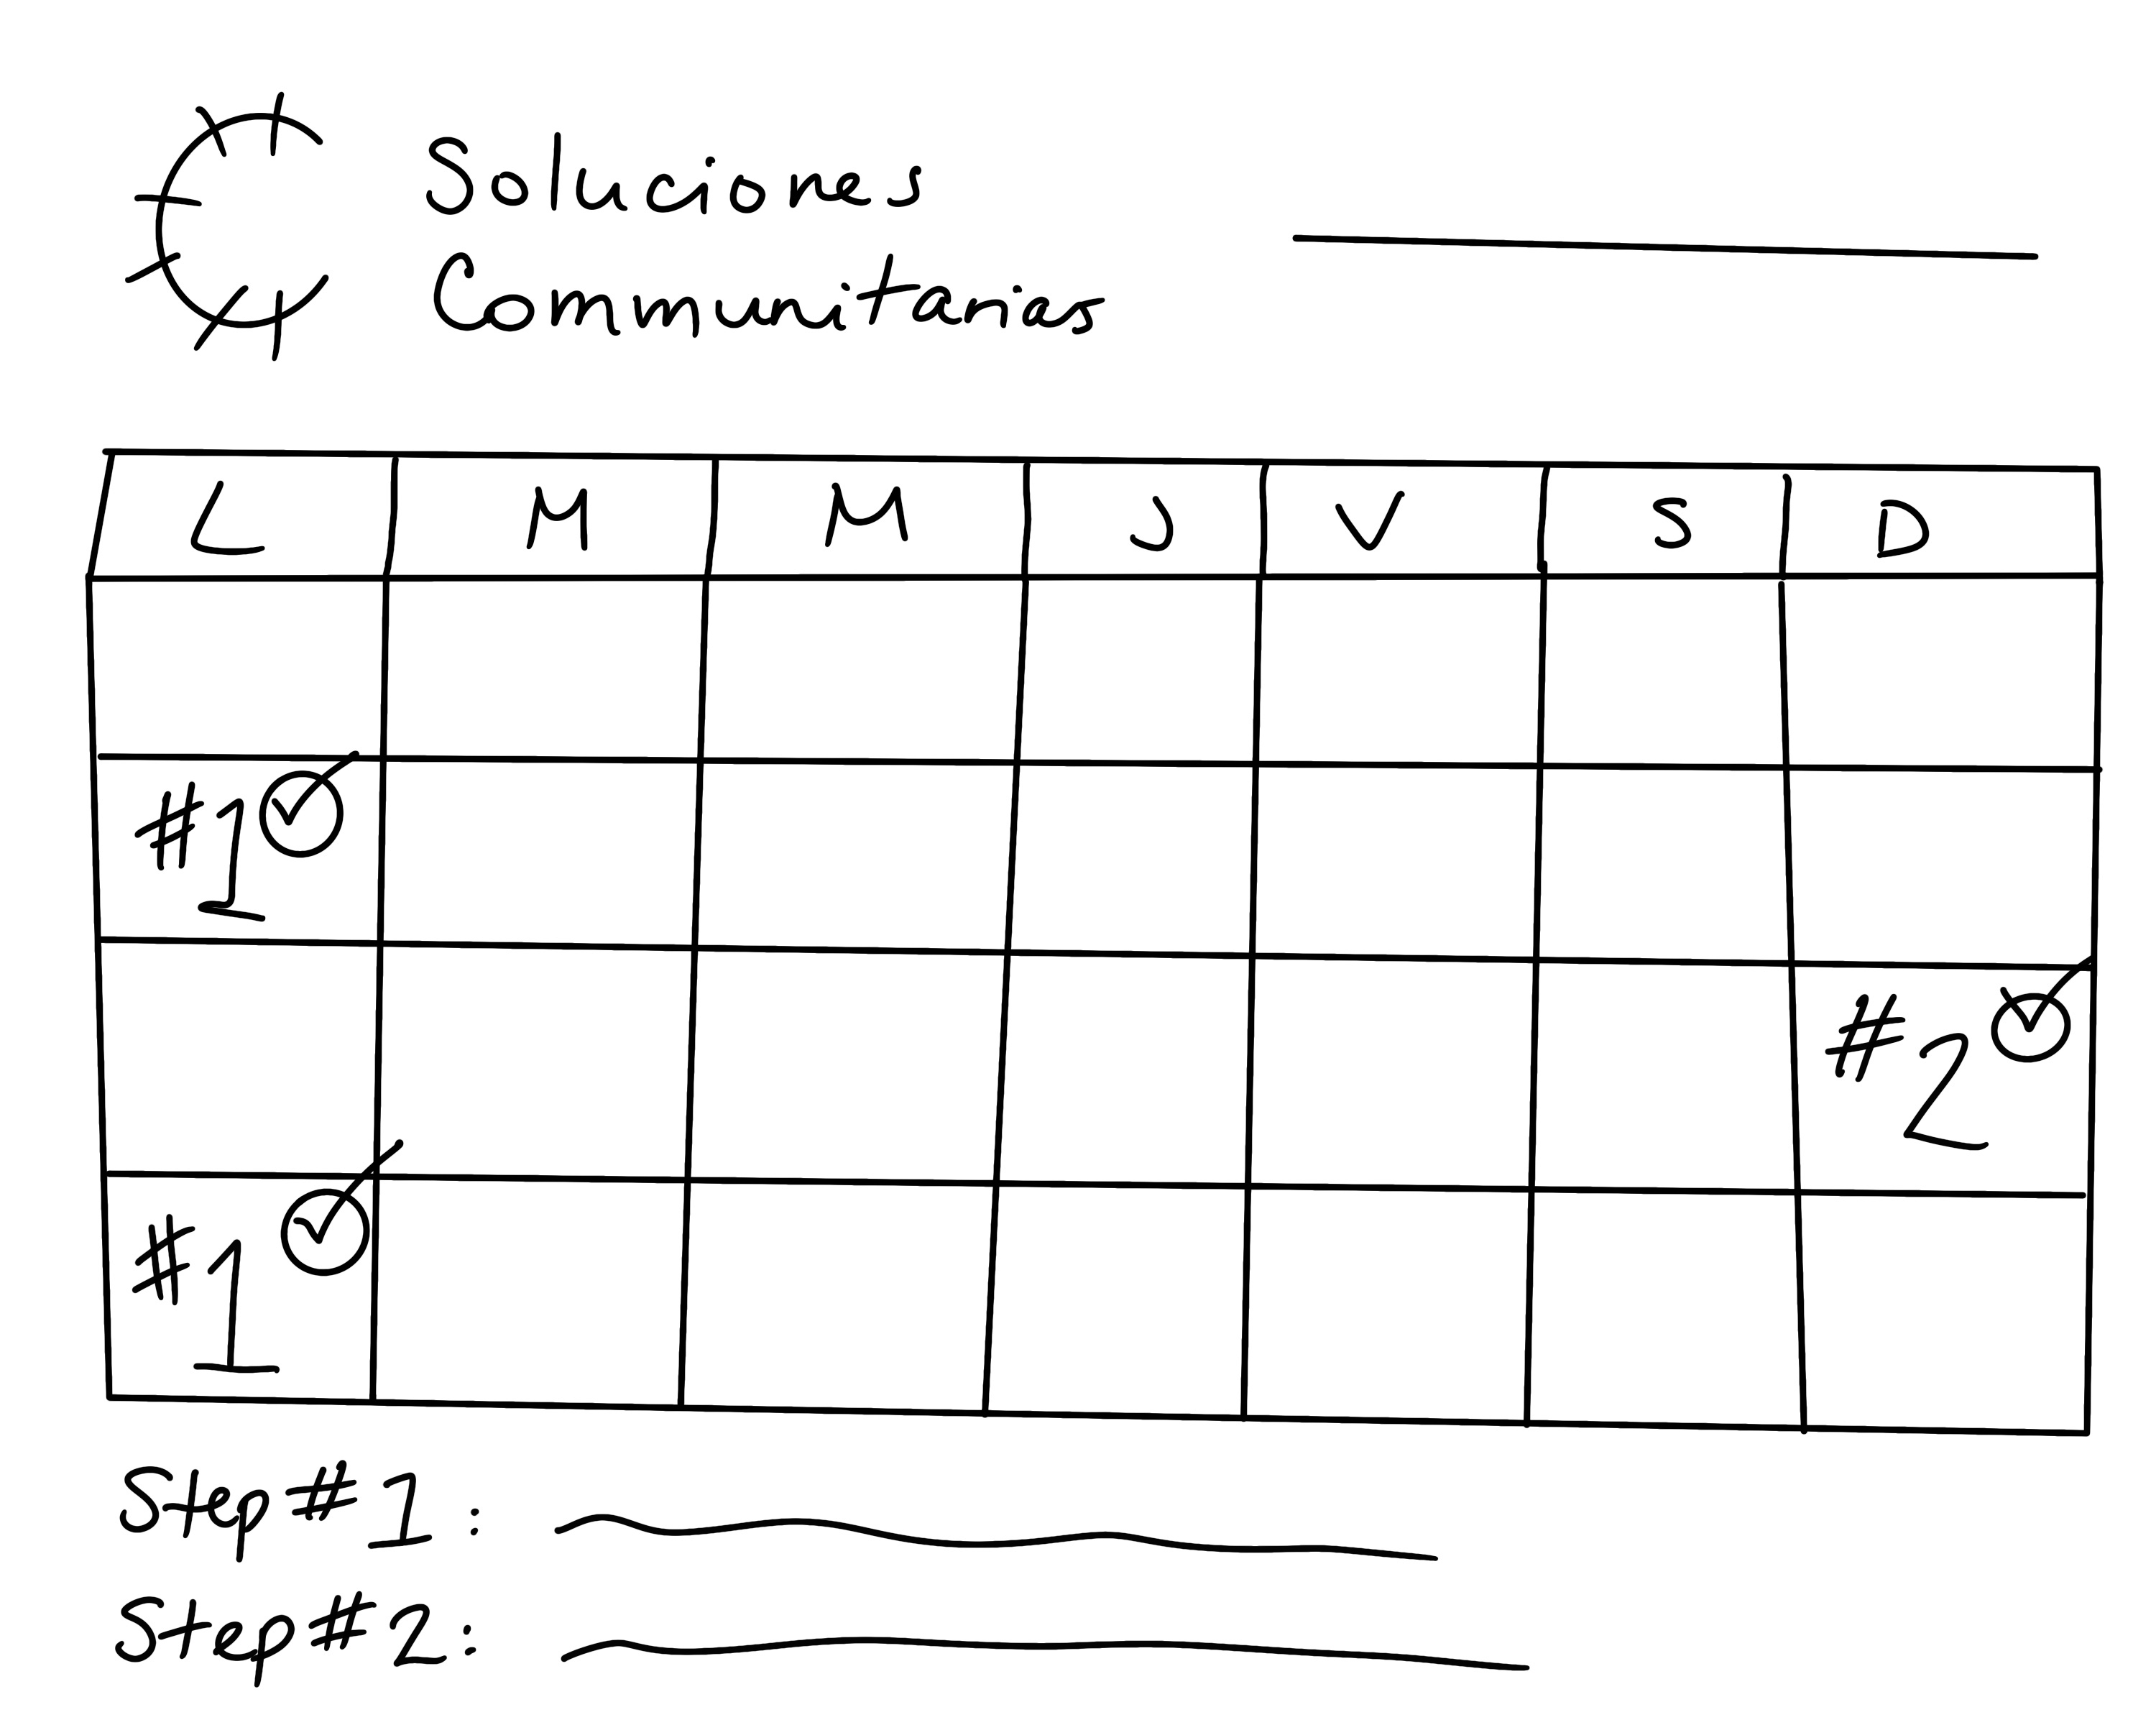 Sketch of a weekly maintenance calendar